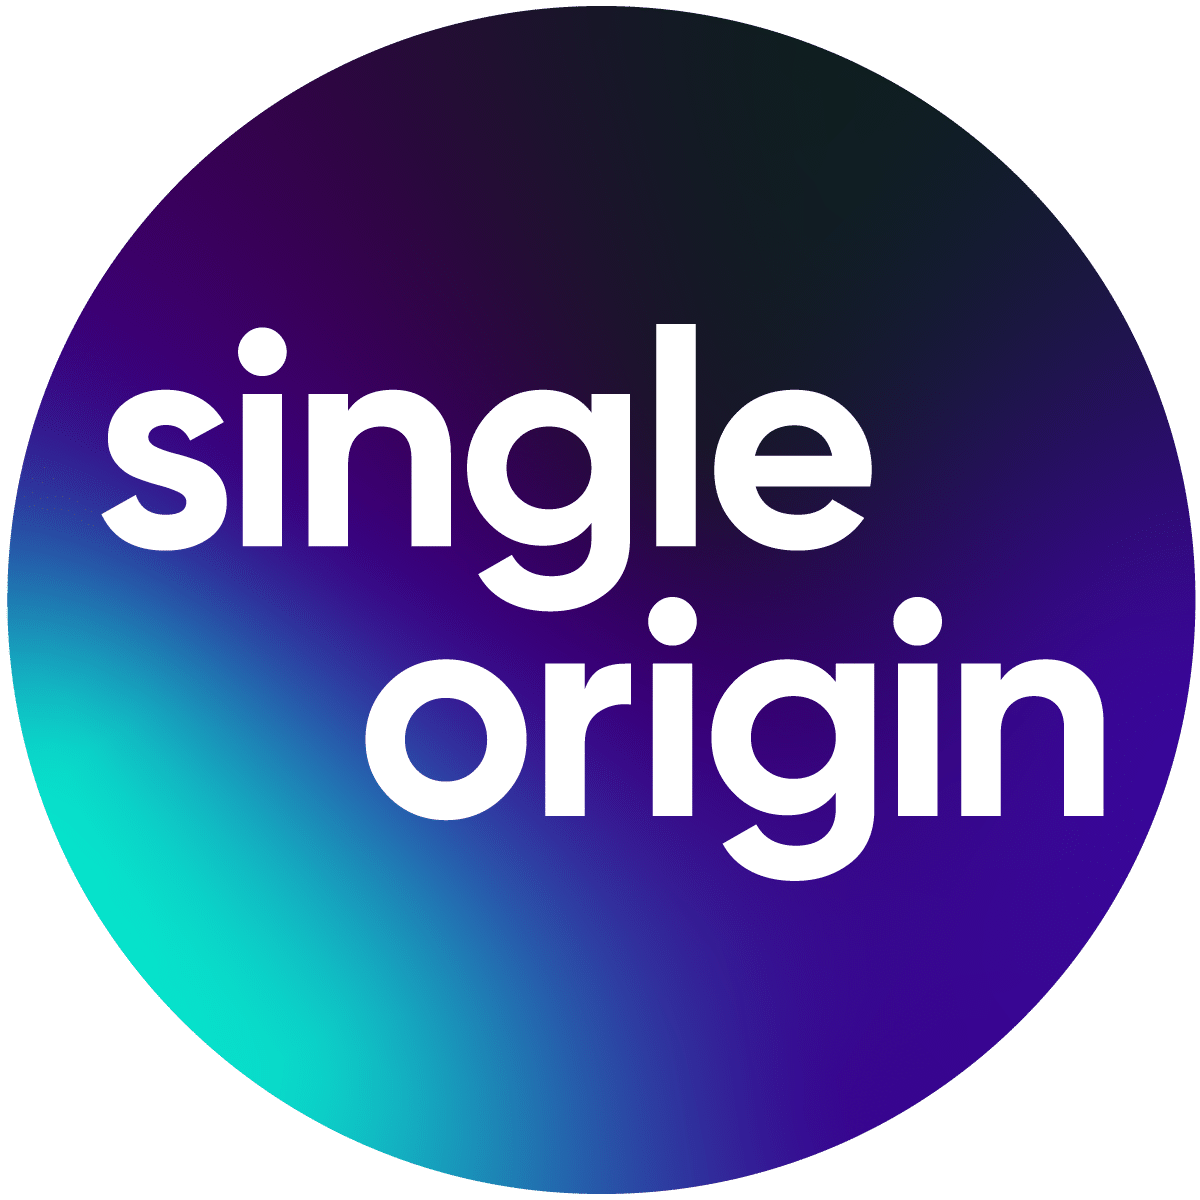 Single Origin - Your Fractional Marketing Team and Website Design Experts